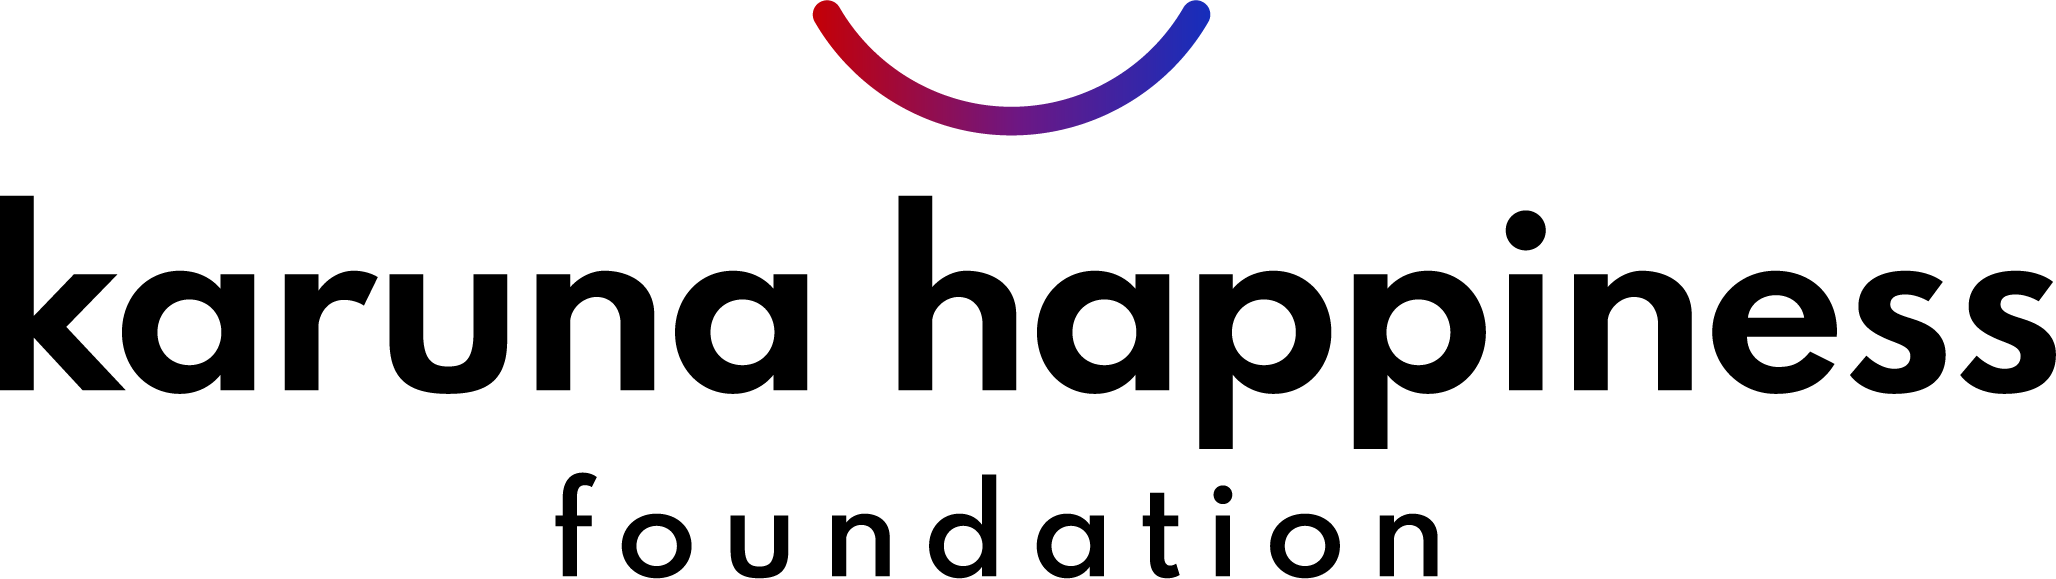 Karuna Happiness Foundation logo